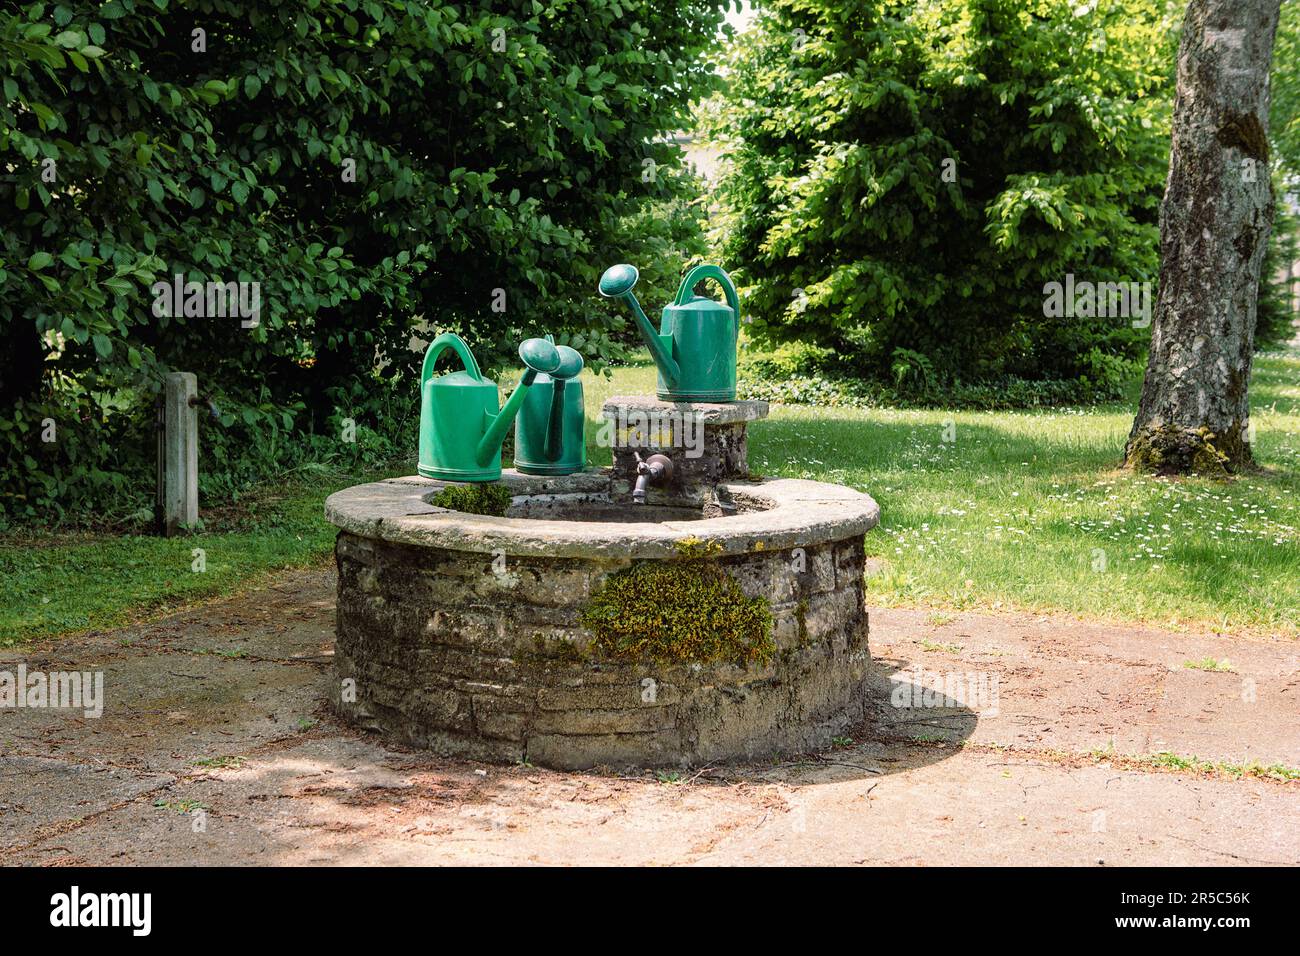 Group of green garden watering can in front of stone well. Romantic garden or parc, summertime secret garden scene. Stock Photo